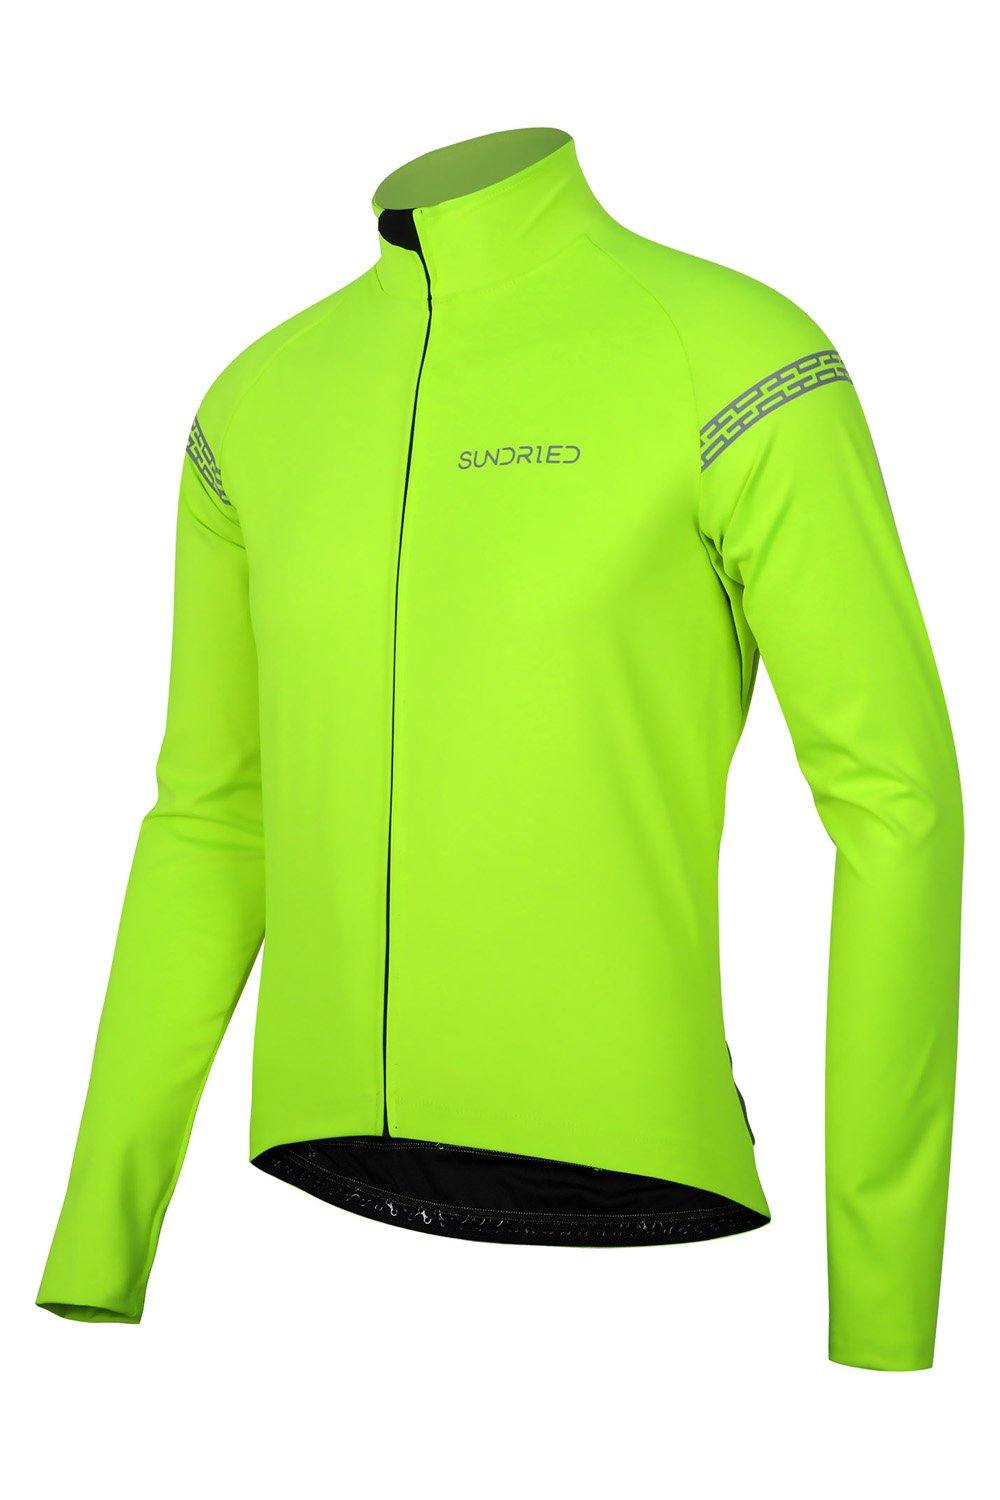 Sundried Equipe Men's Bike Jacket Cycle Jacket XXL Green SD0343 XXL Green Activewear